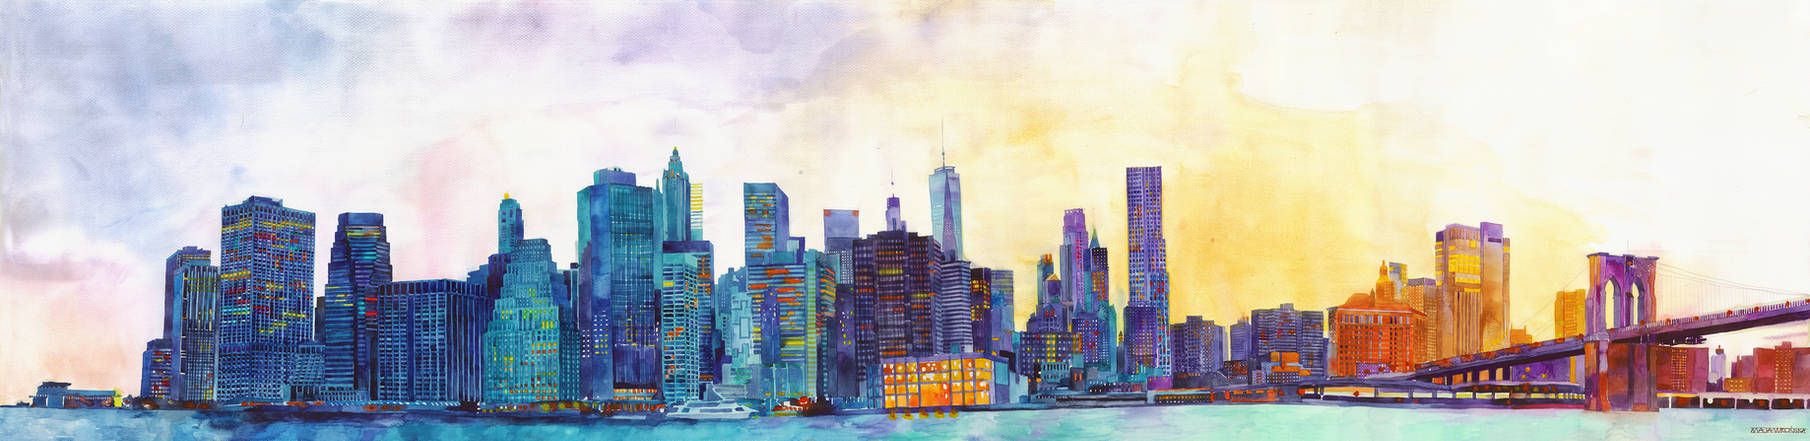 NYC panorama by takmaj